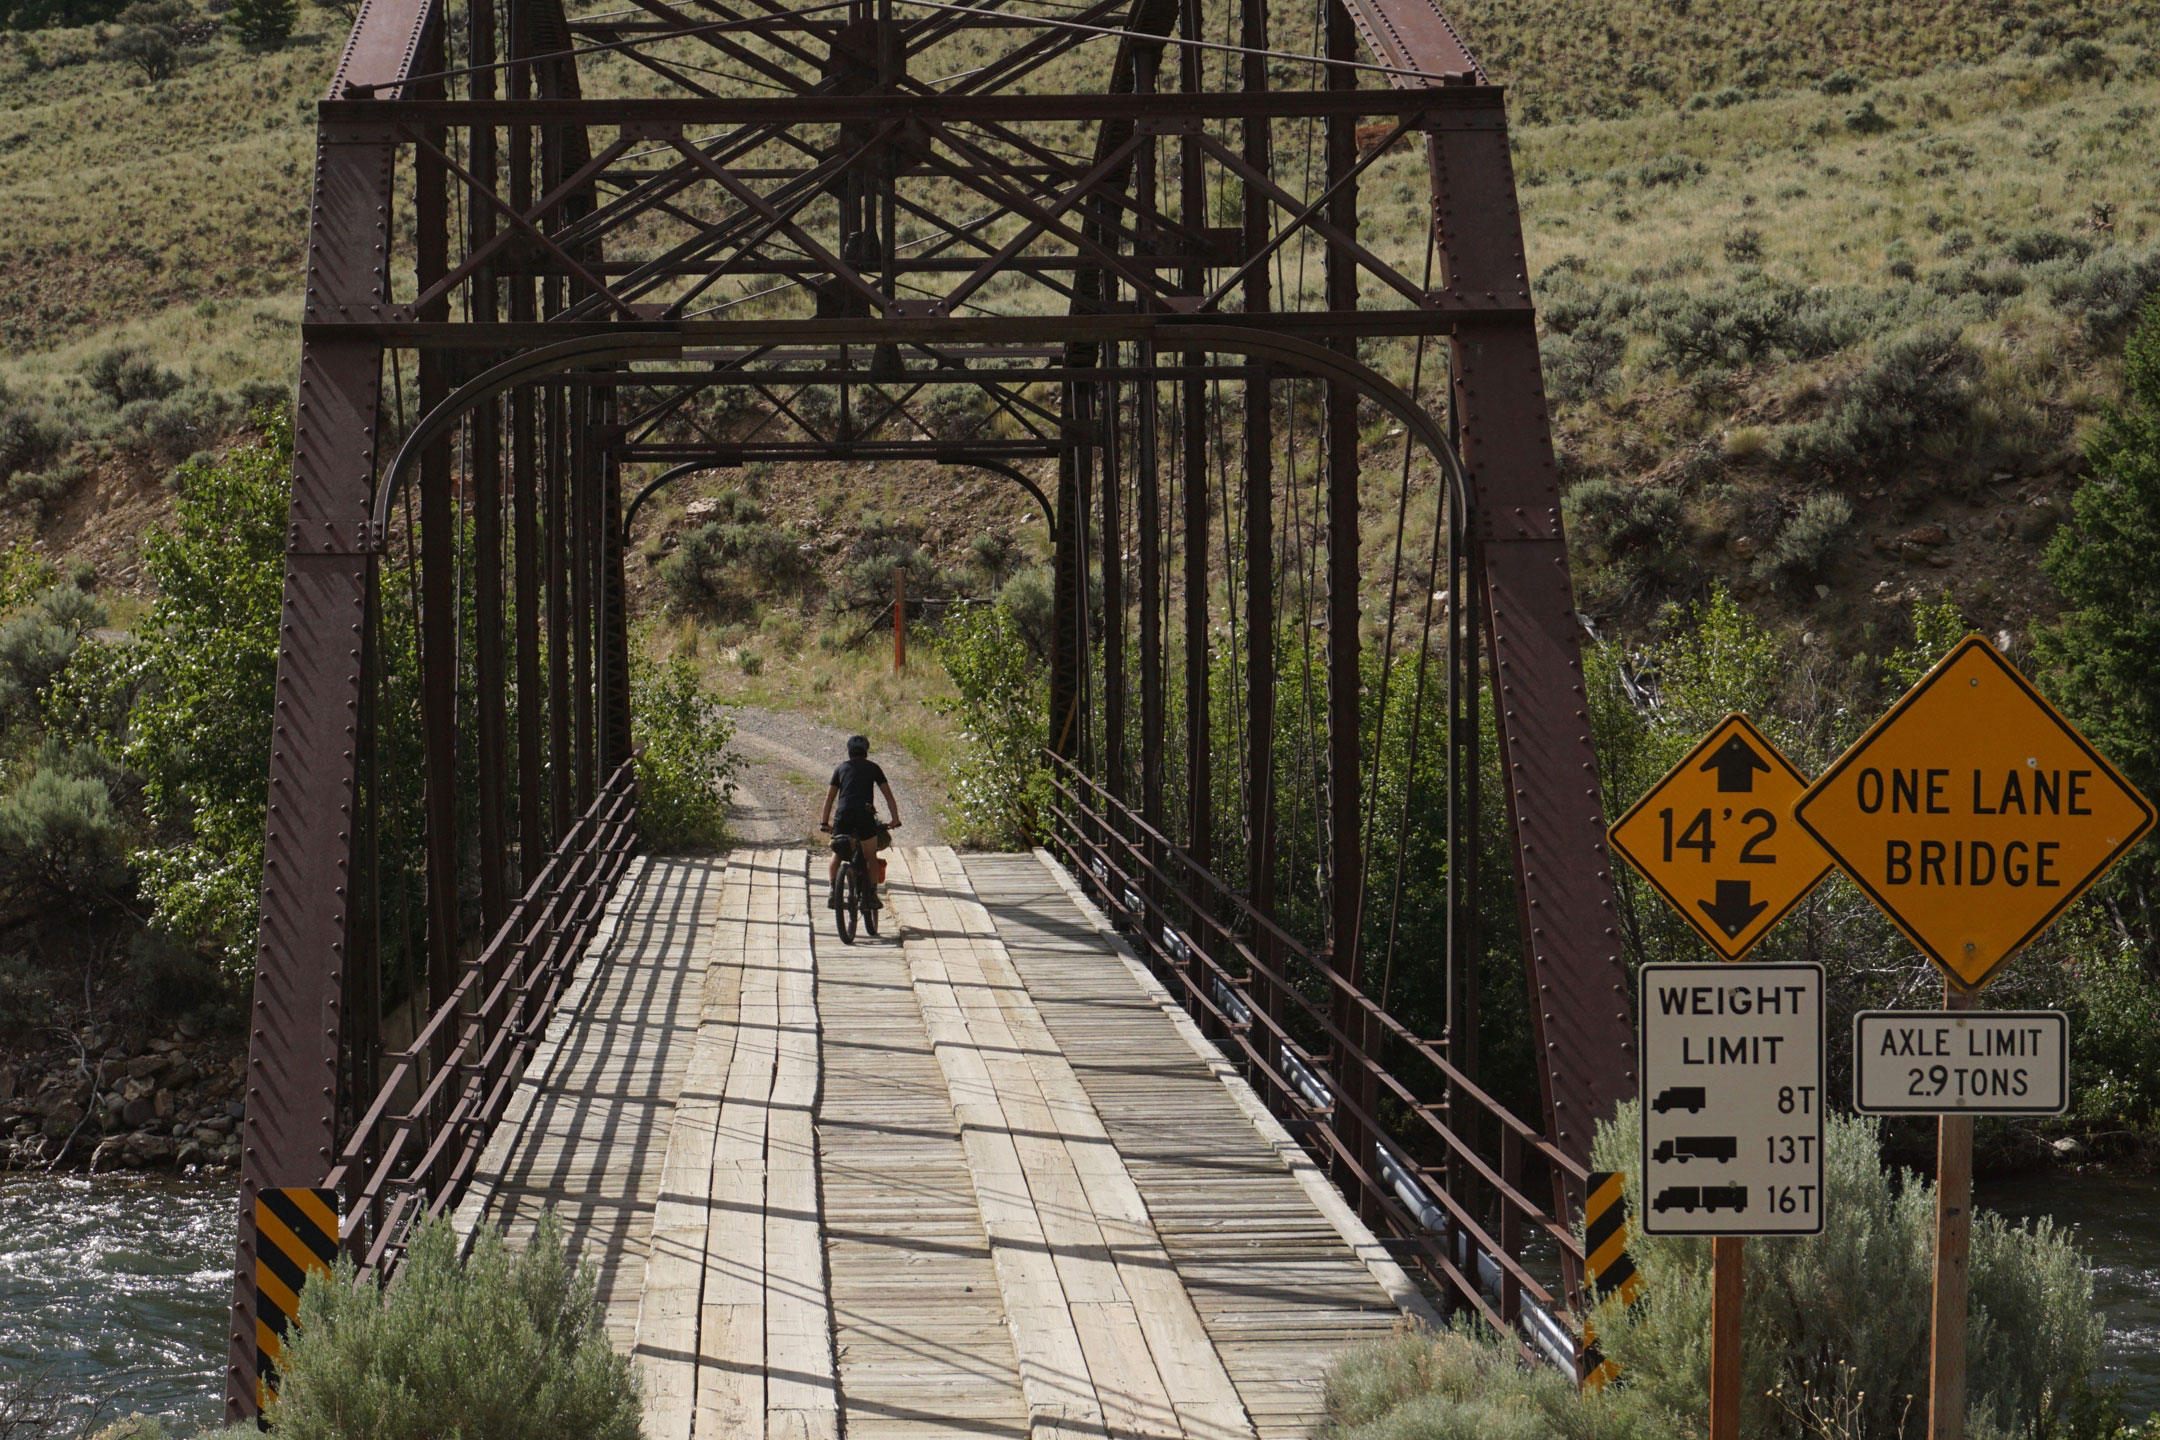 Bike-Packing-In-Idaho-Riding-Bridge.jpg